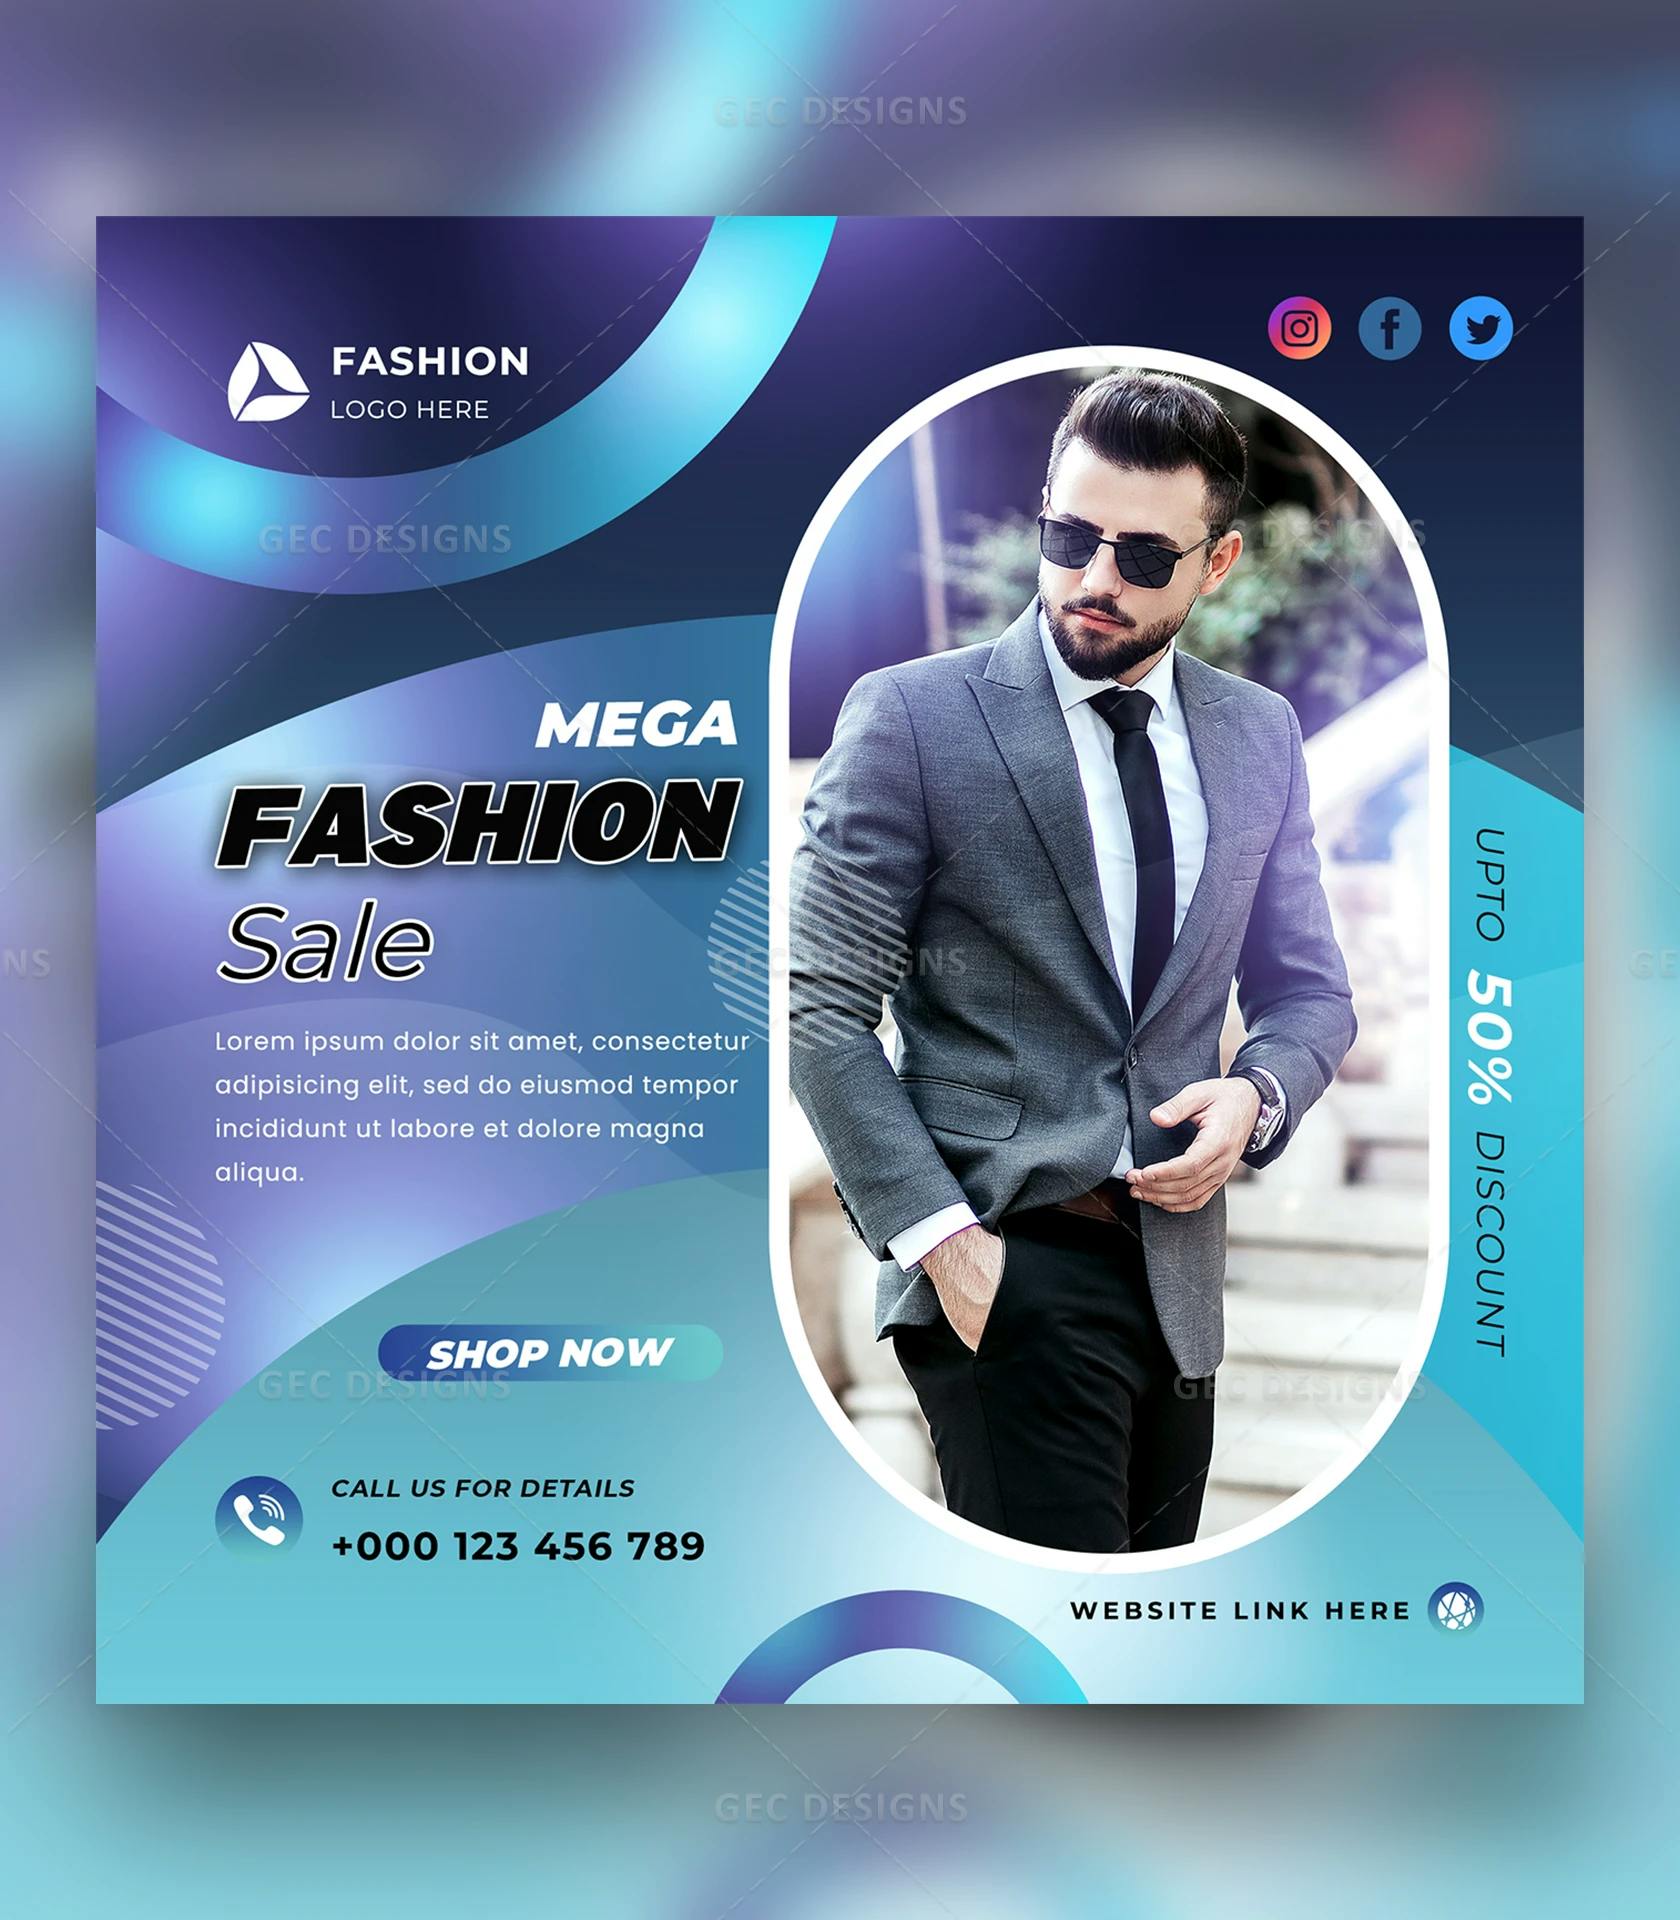 Mega Fashion Sales Promotion Instagram Poster Template